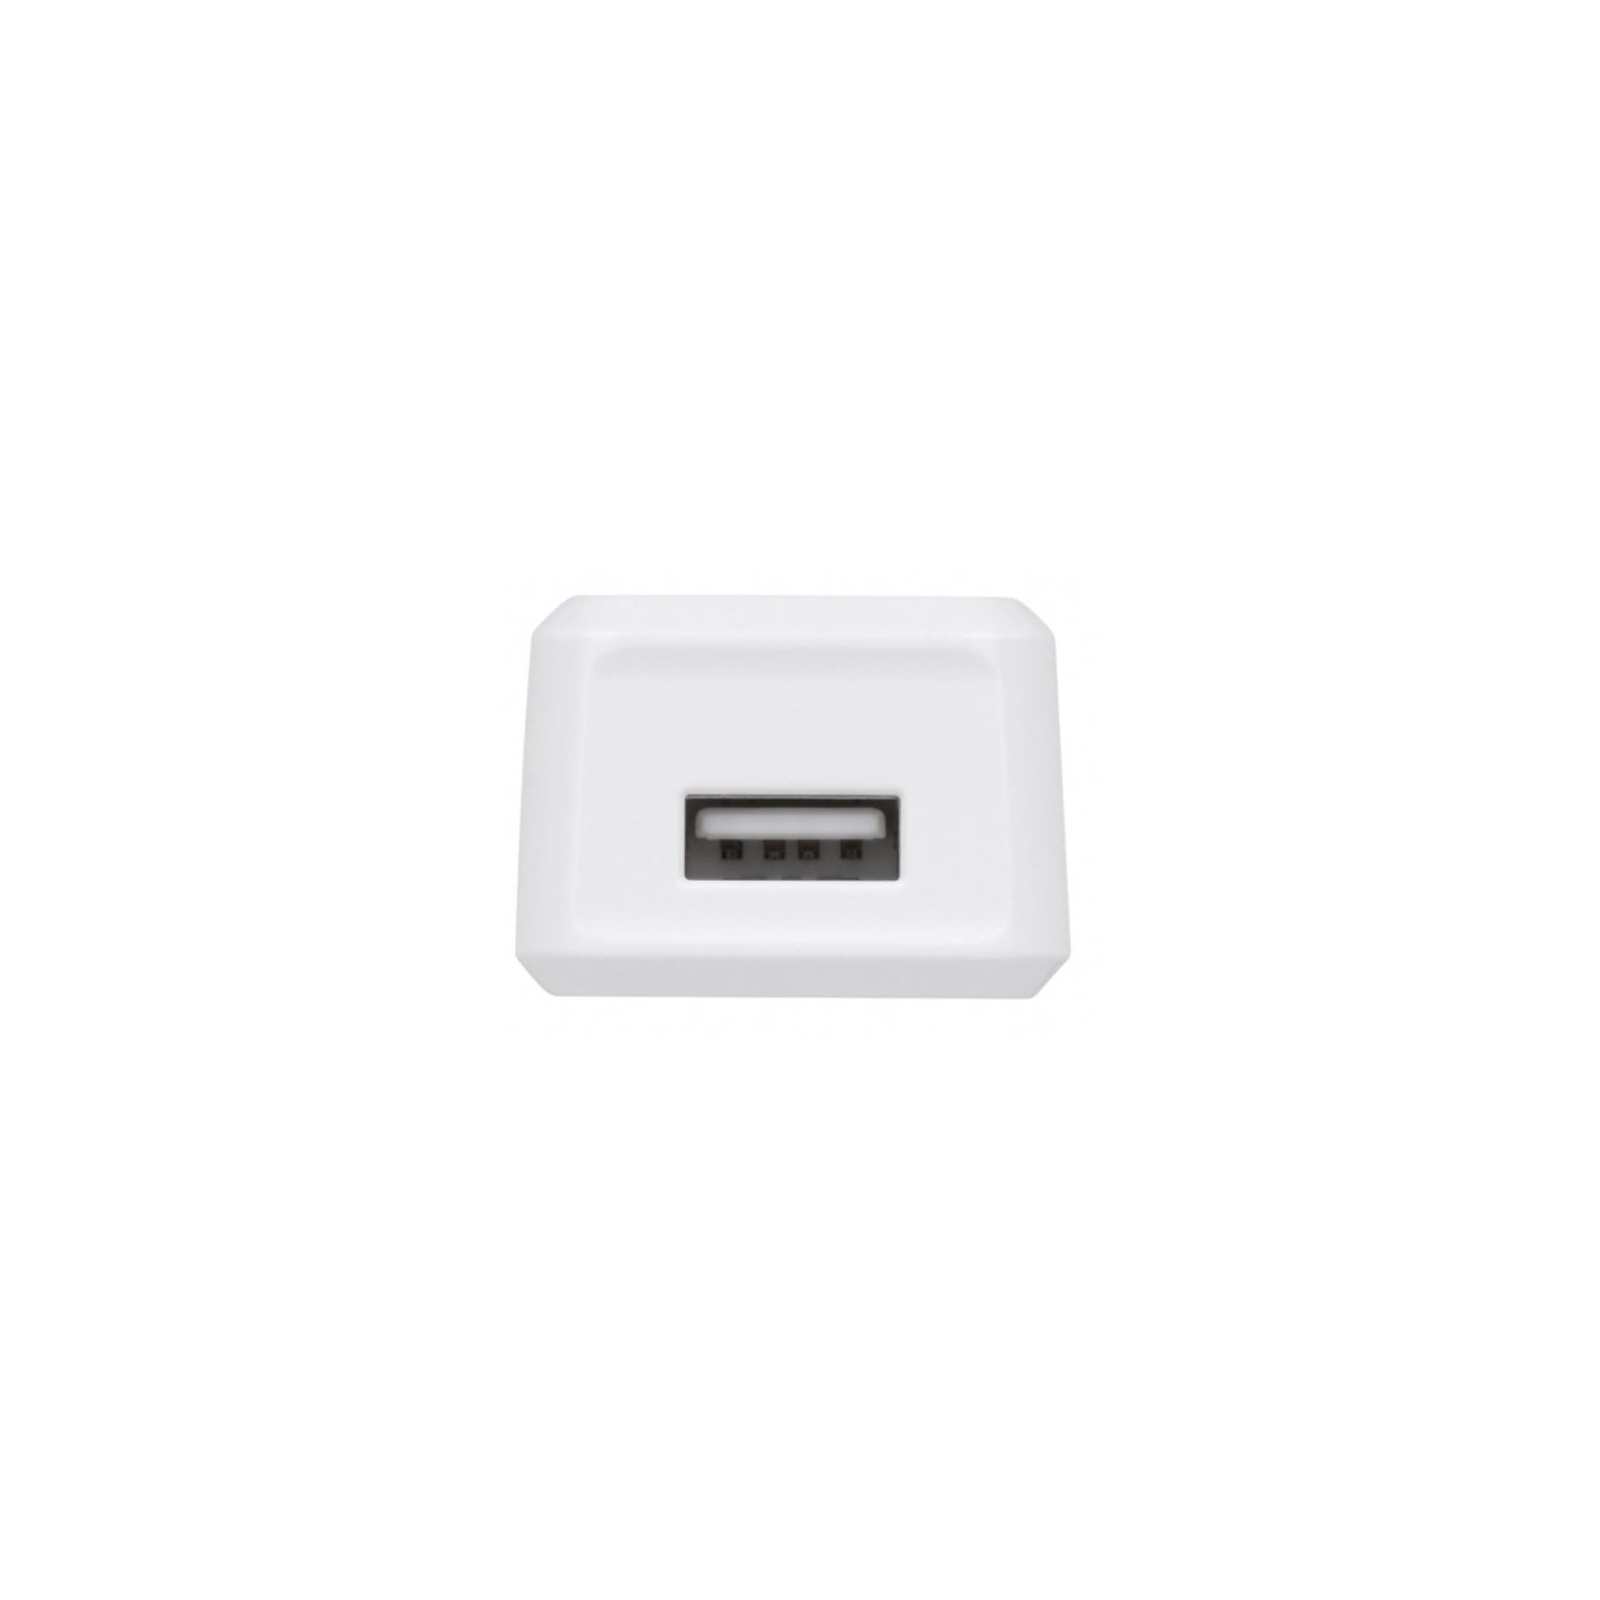 Зарядний пристрій 2E USB Wall Charger USB:DC5V/1A, white (2E-WC1USB1A-W) зображення 3